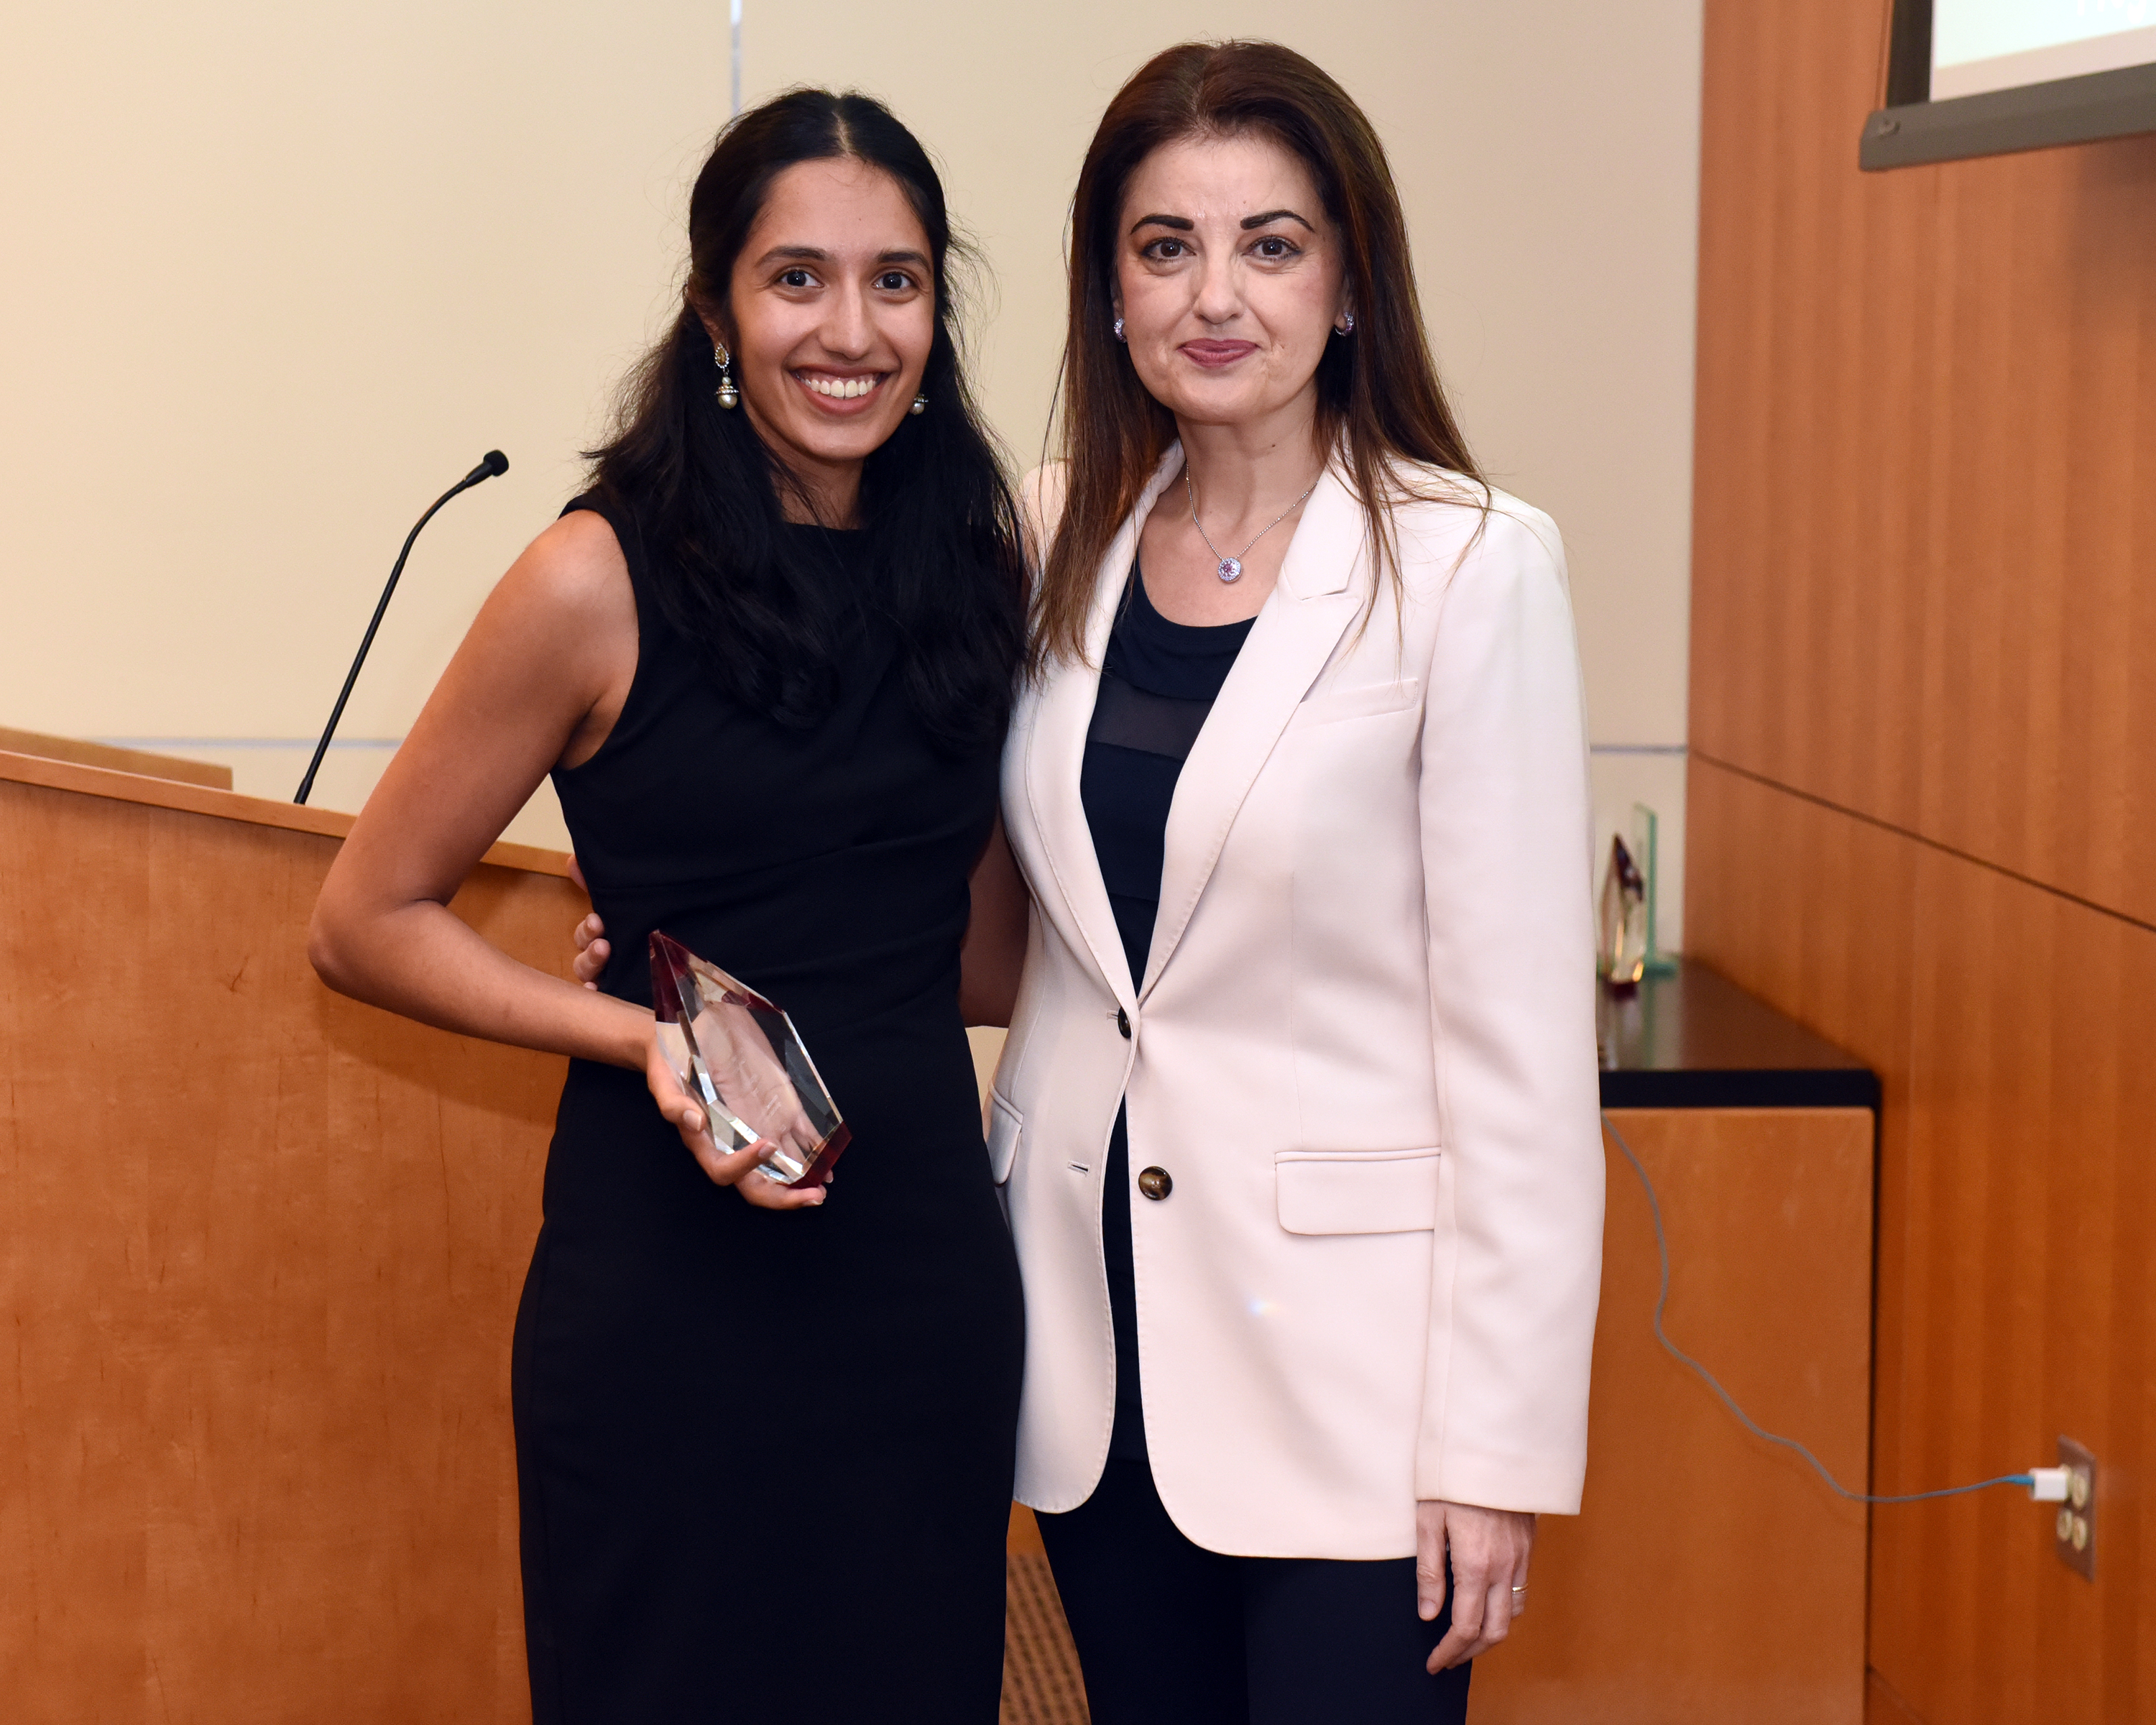 Aishwarya Iyer and  Dr. Kontrogianni-Konstantopoulos stand next to each other. Aishwarya is holding her Otani Award